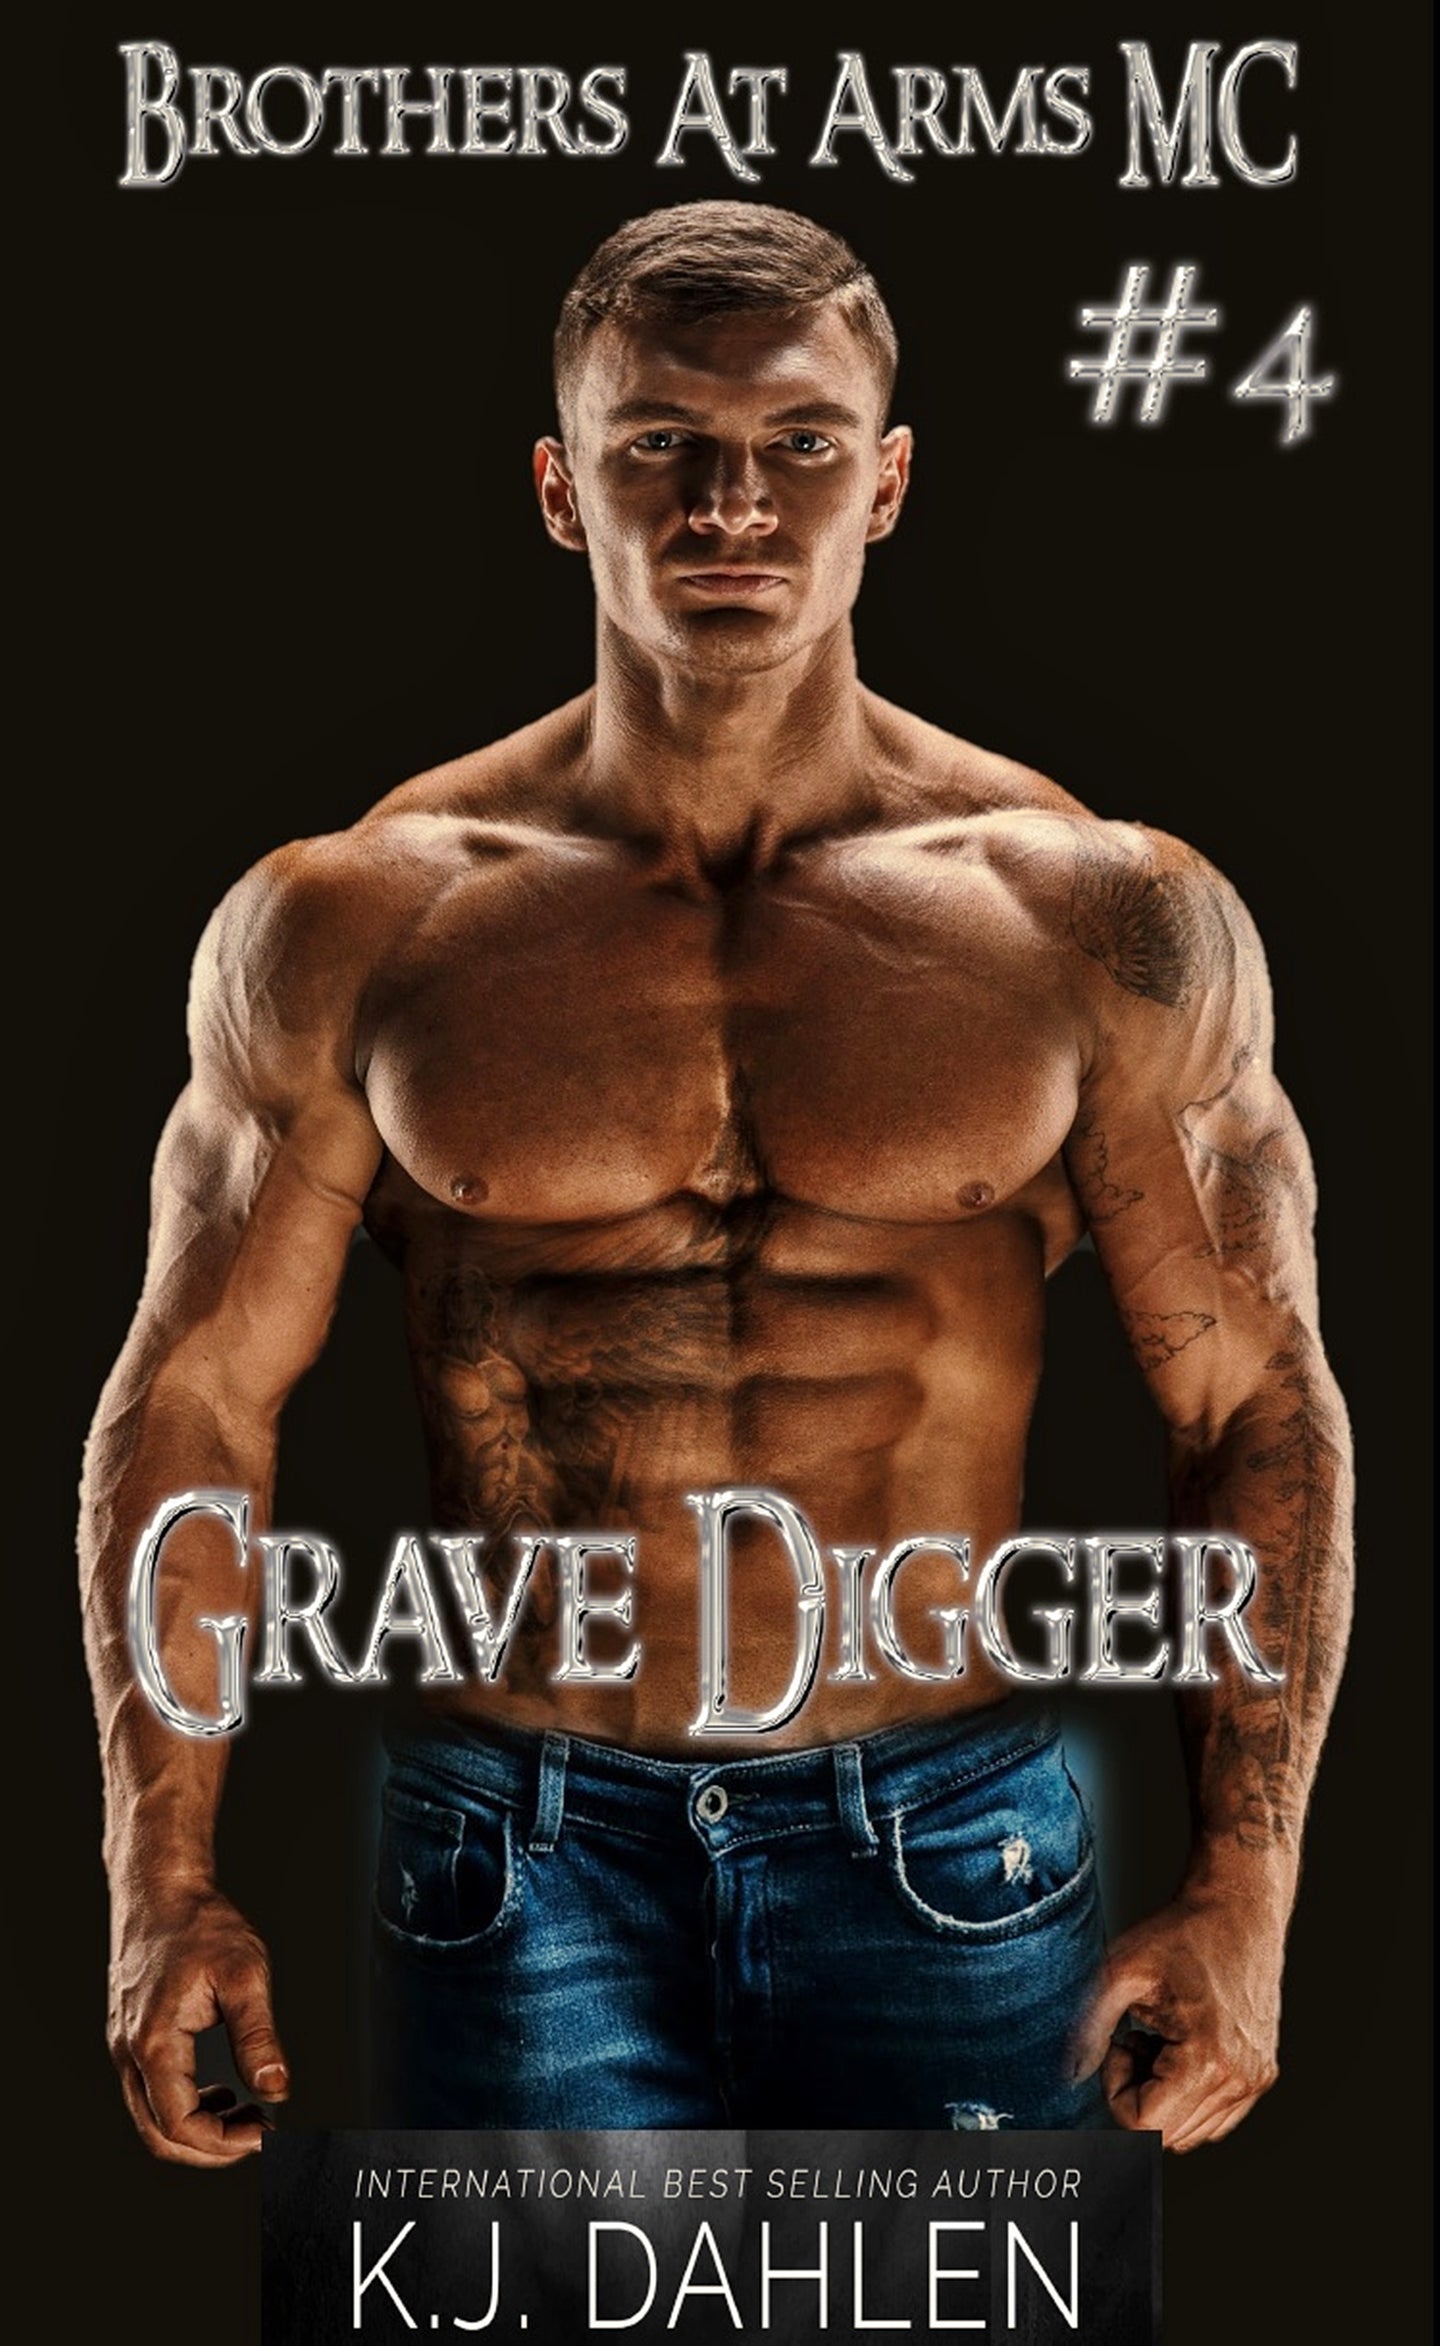 GraveDigger-Brothers At Arms#4-Single